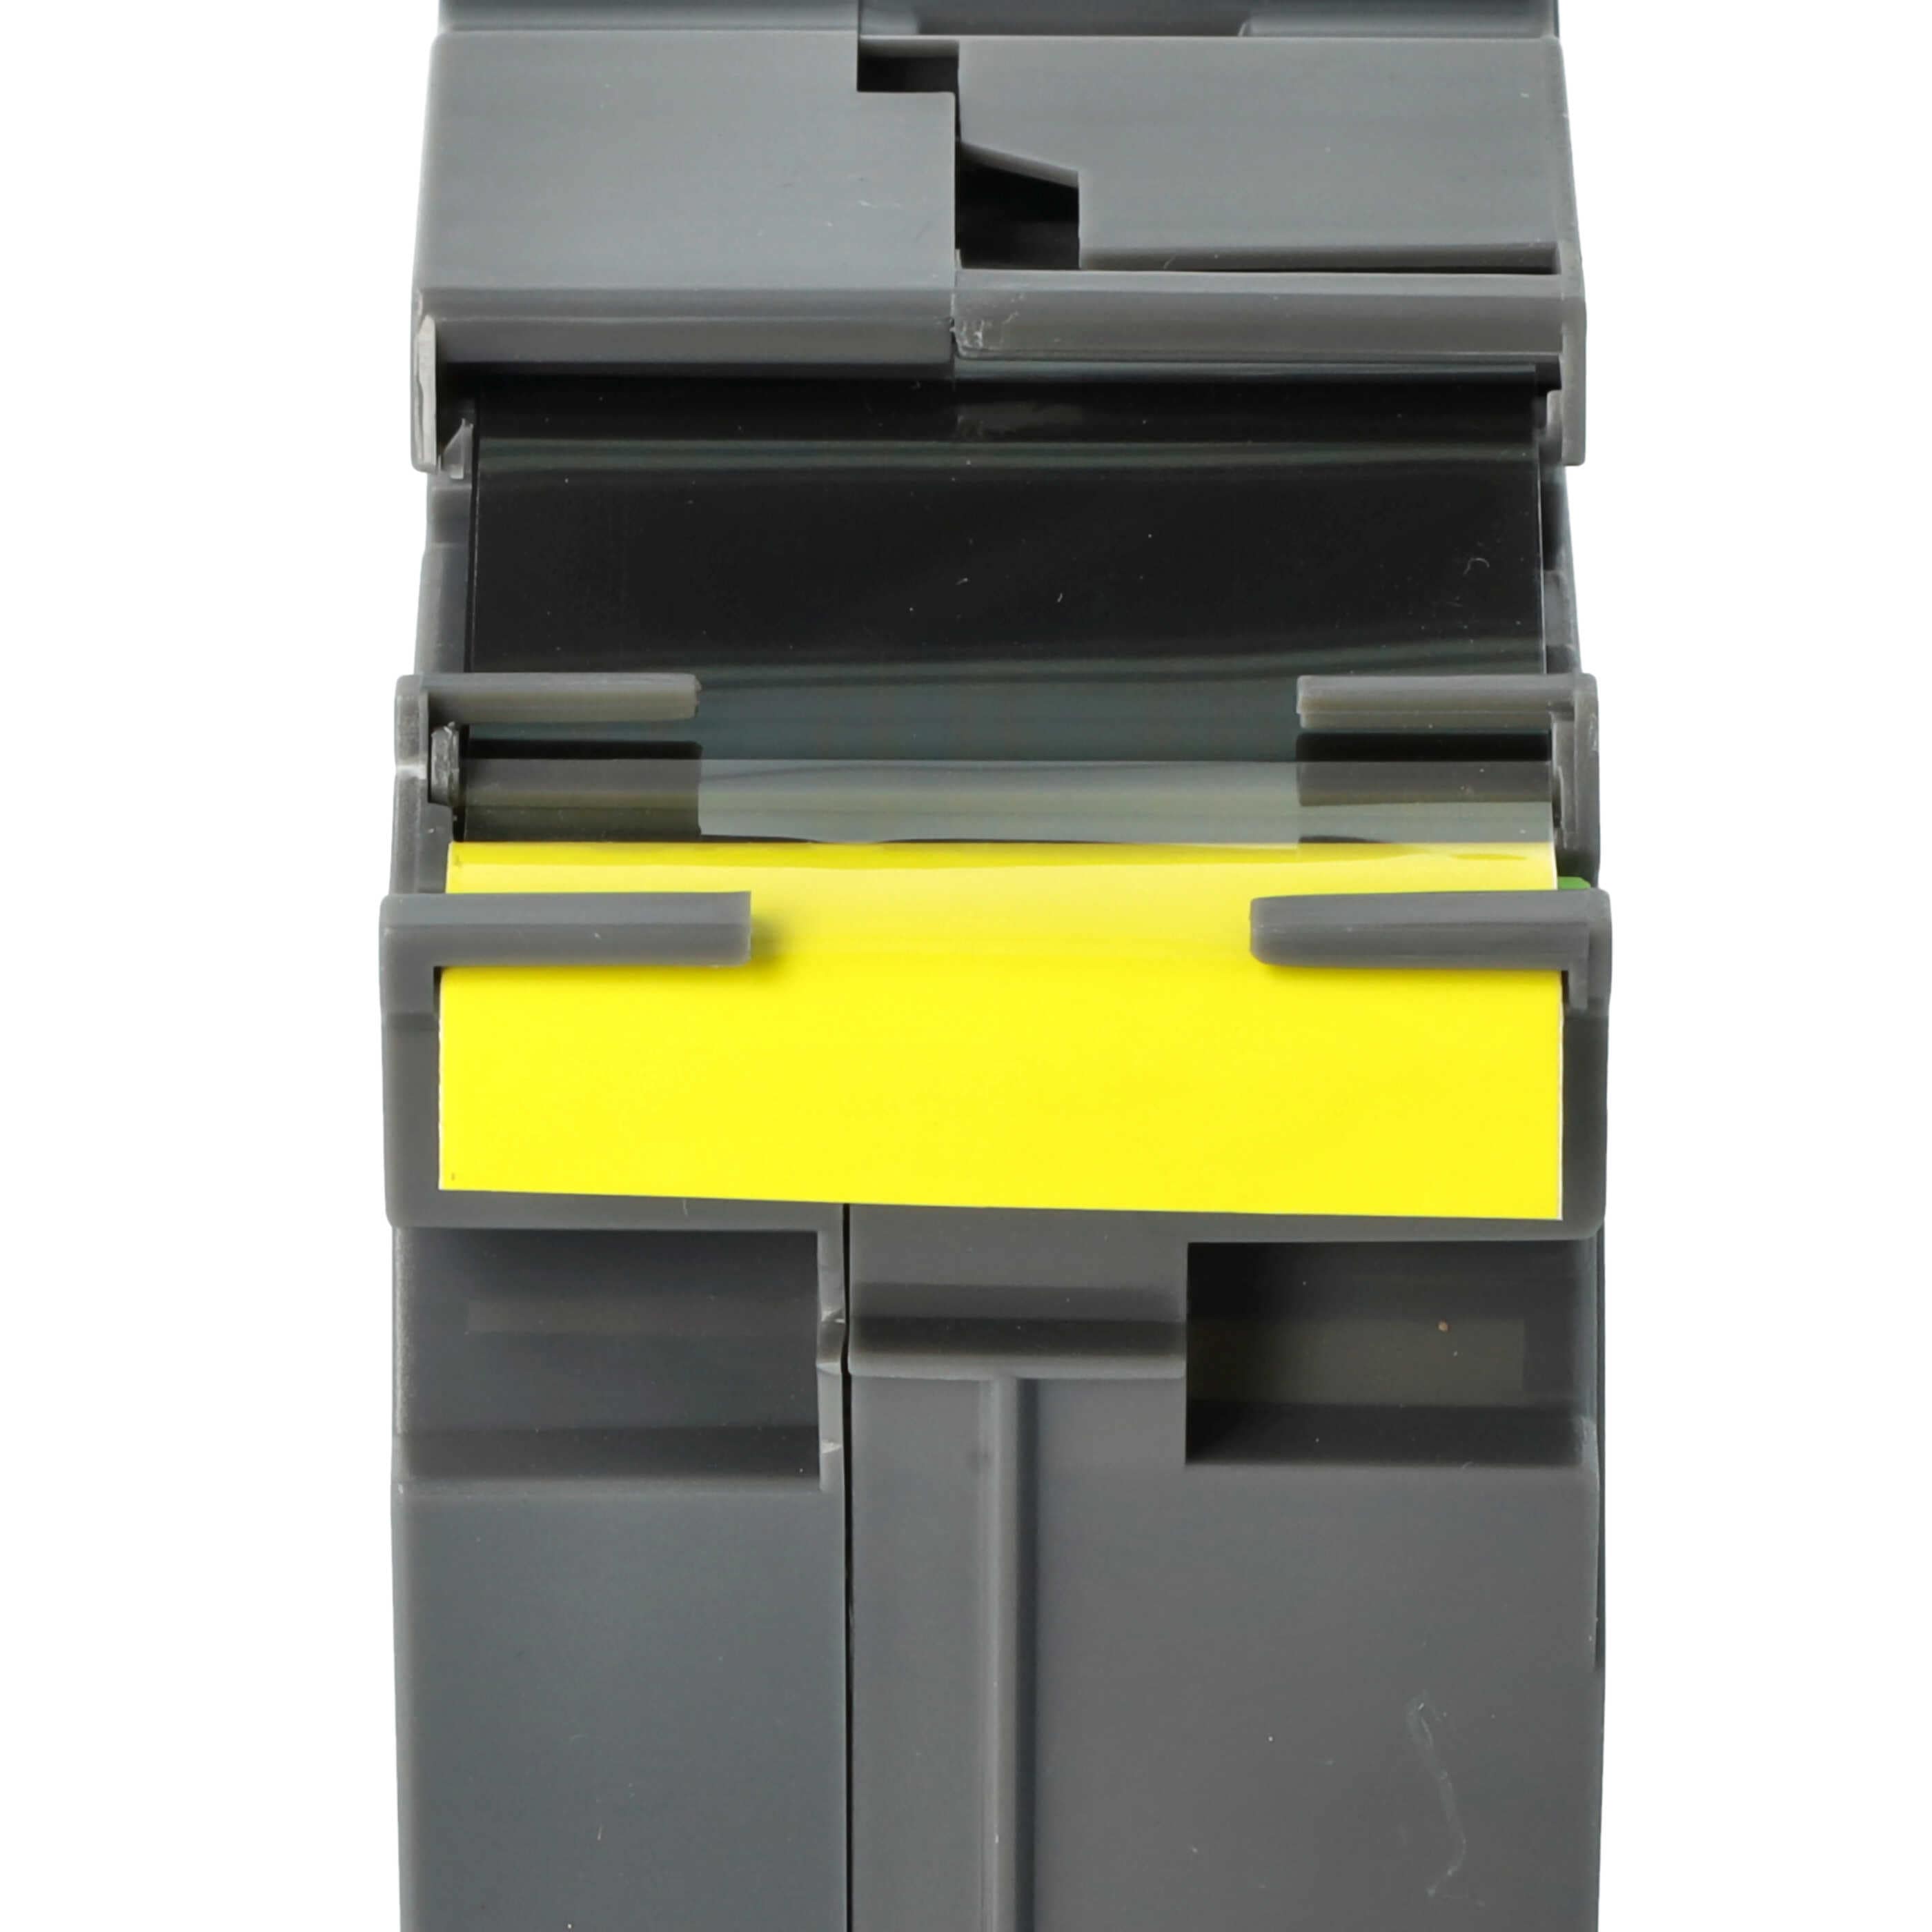 Casete cinta escritura reemplaza Brother TZE-661L, TZ-661 Negro su Amarillo